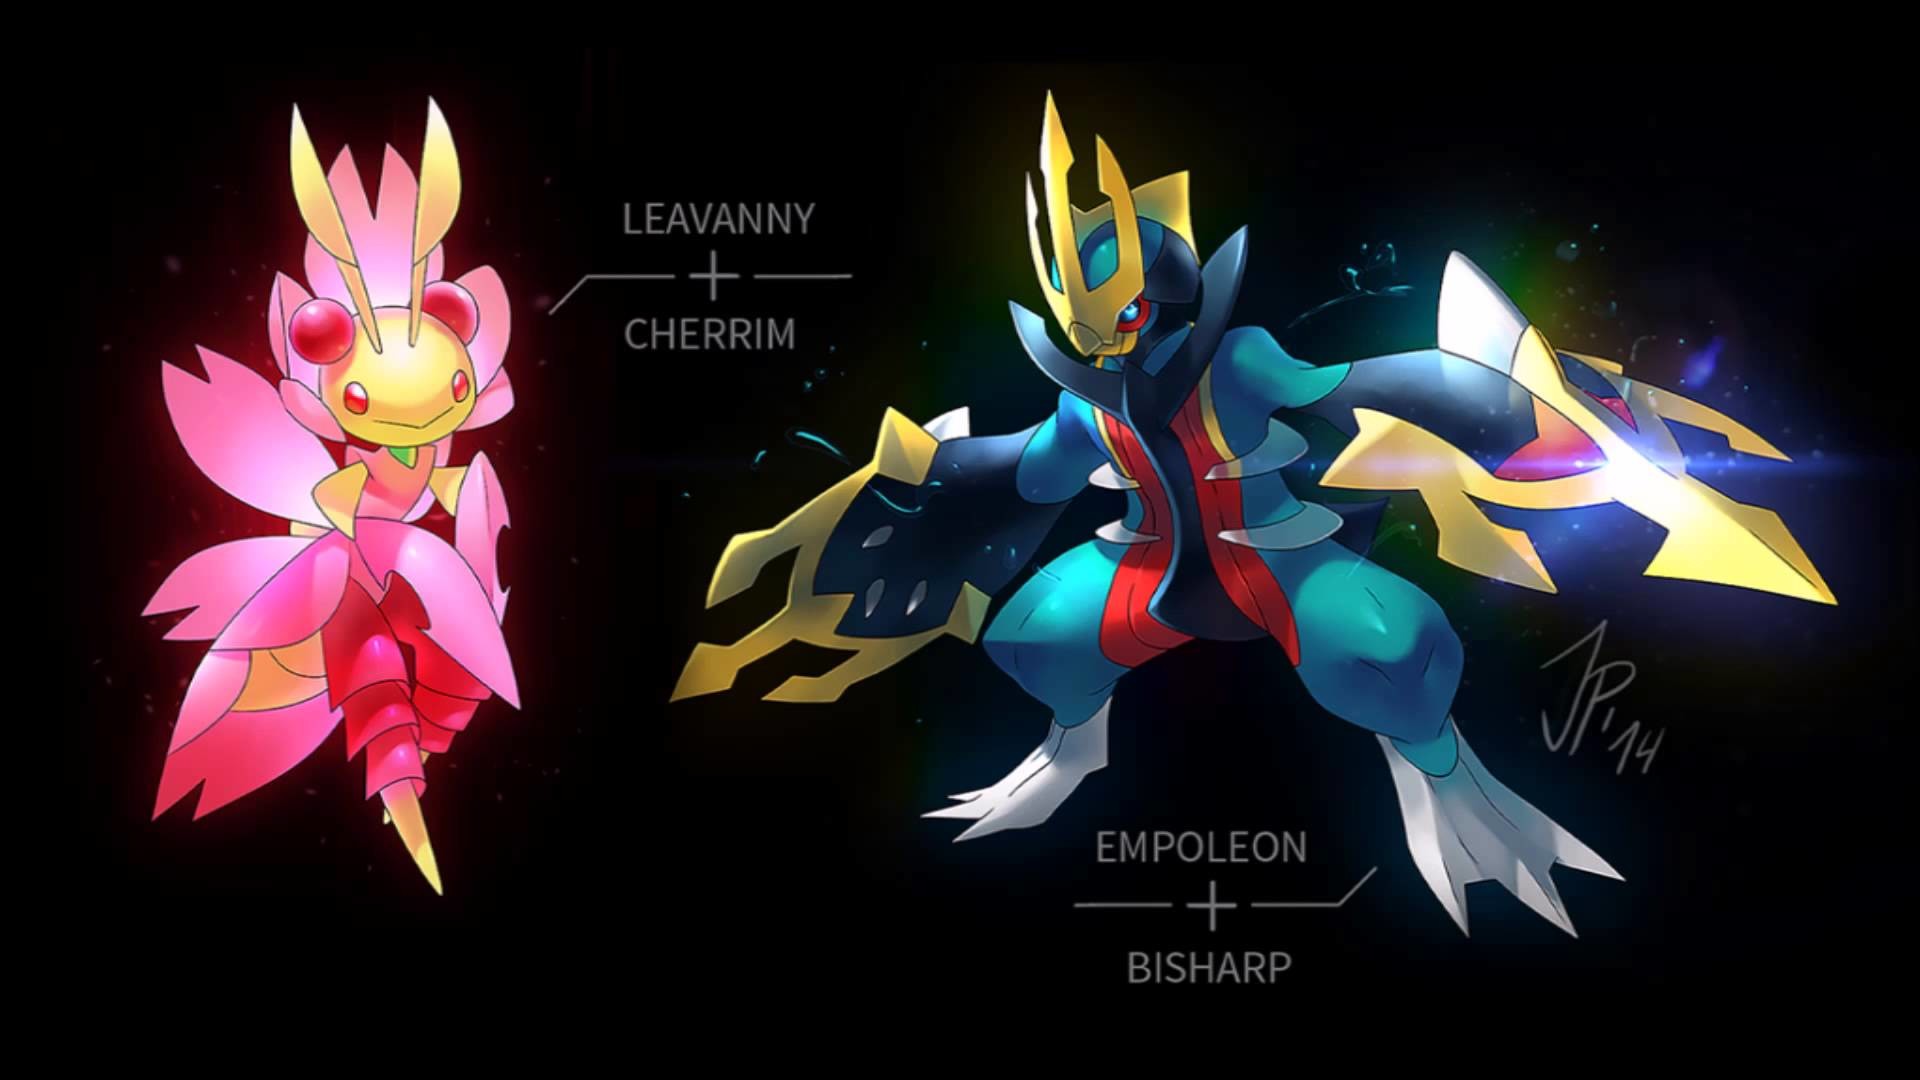 Cool Pokemon Fusions